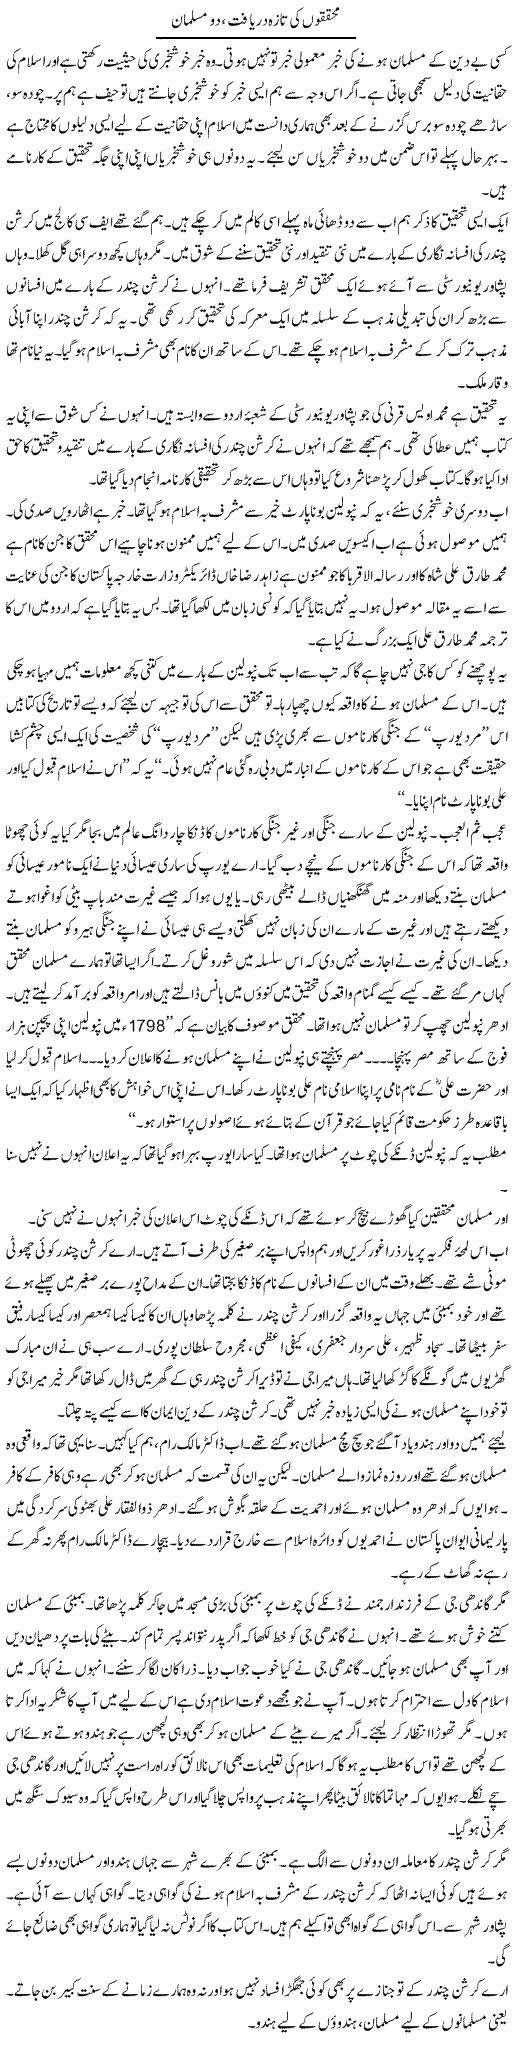 Muhaqaqo Ki Taza Daryaaft Do Musalman | Intizar Hussain | Daily Urdu Columns